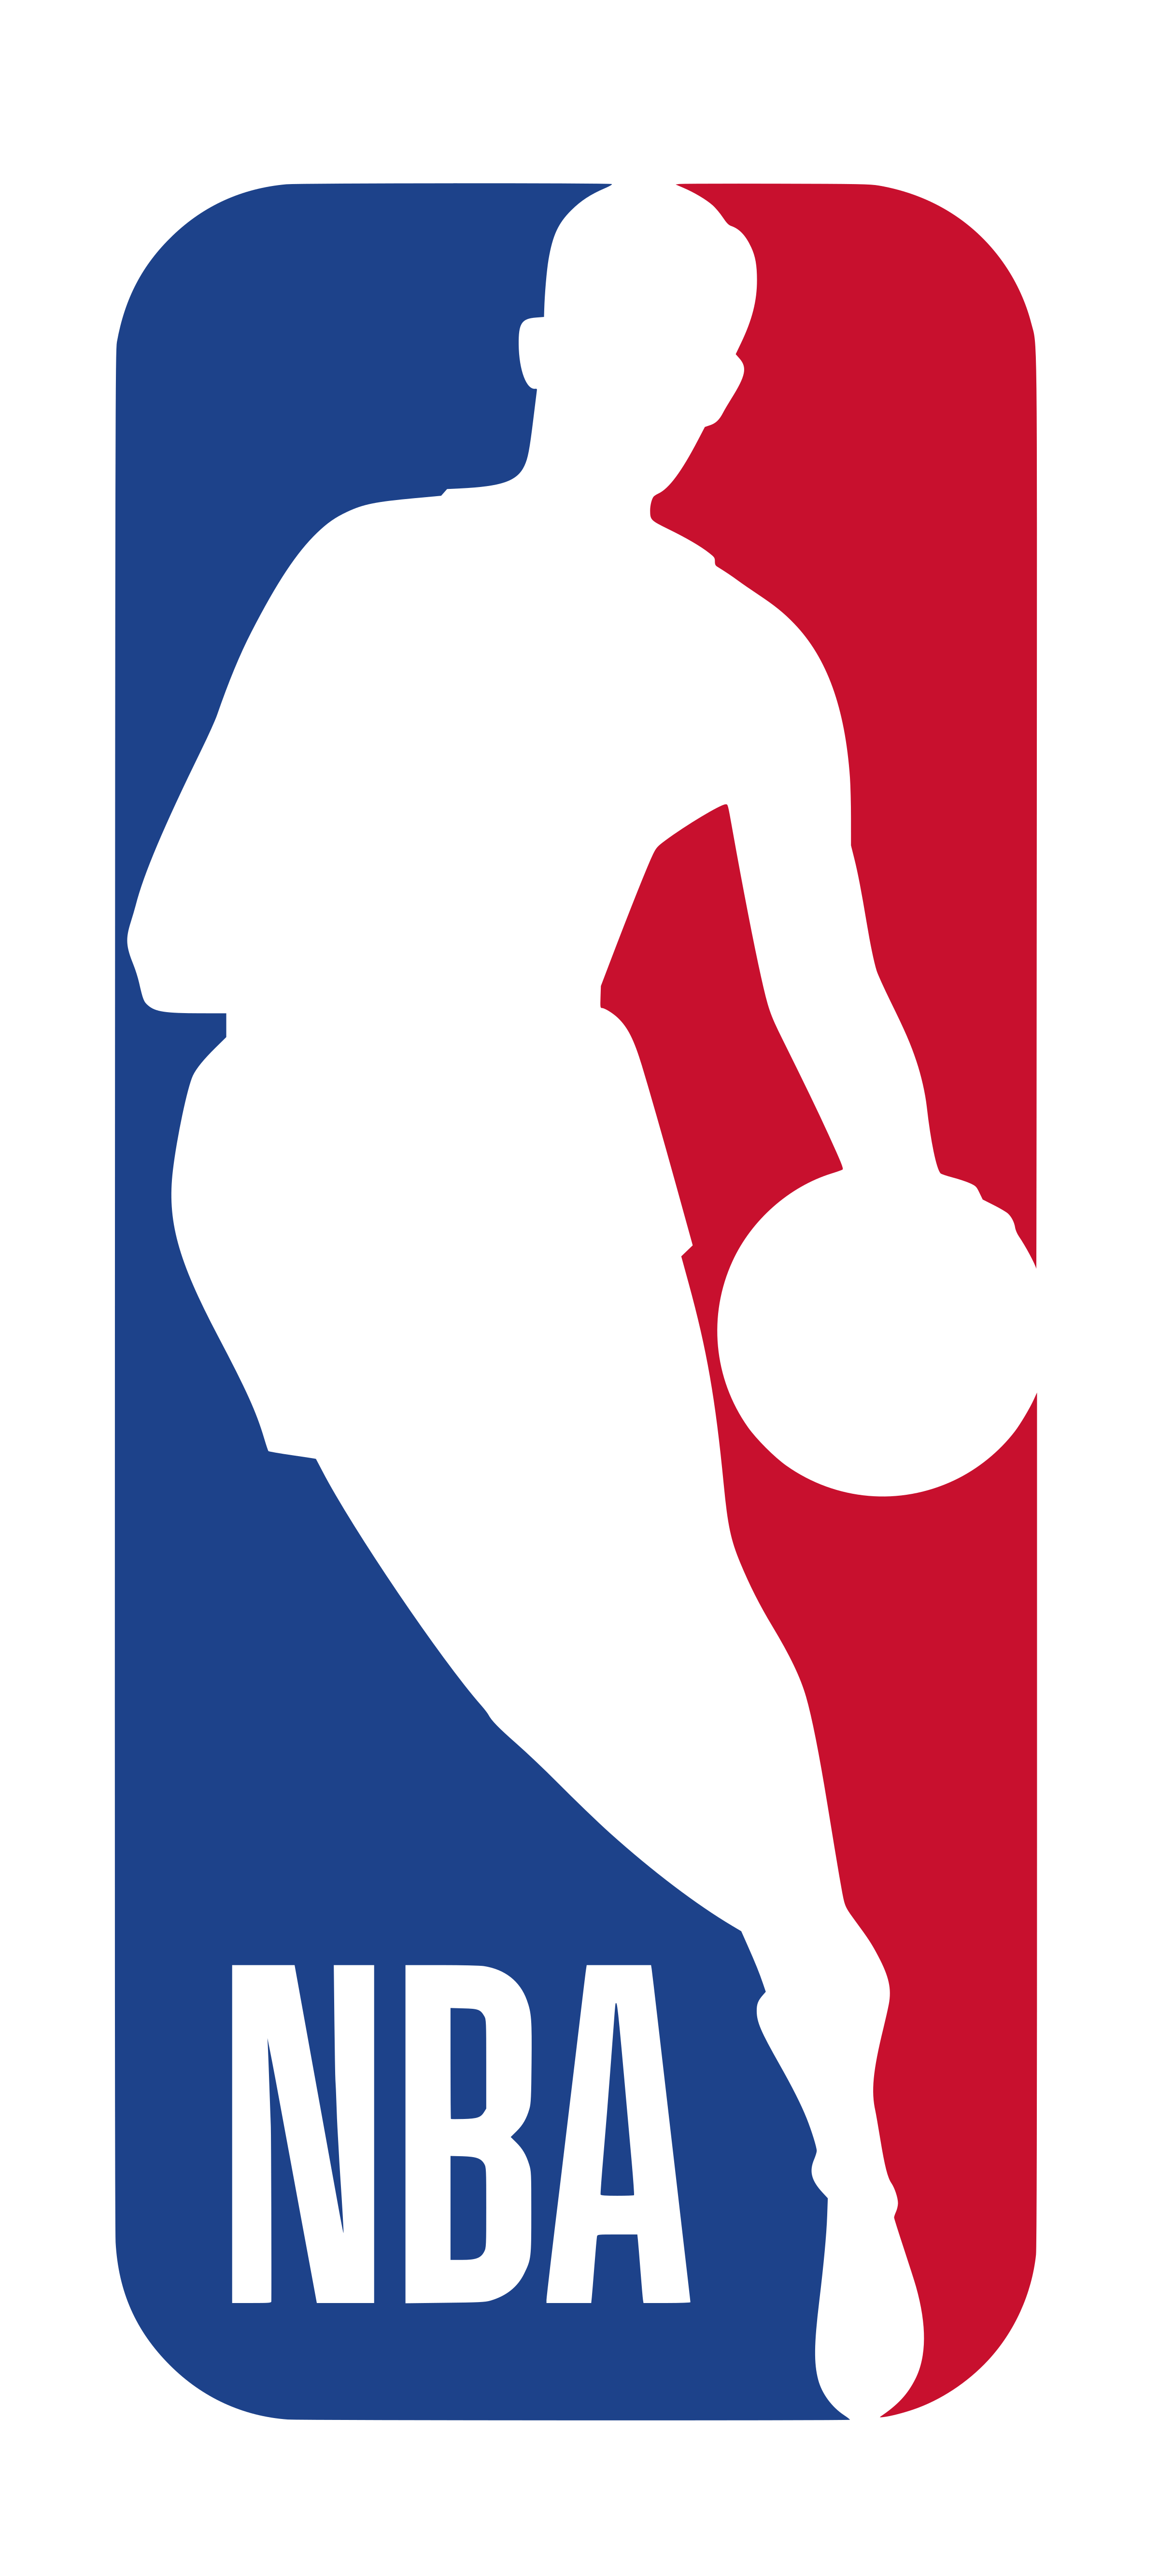 NBA Logo - NBA Logo PNG Transparent & SVG Vector - Freebie Supply